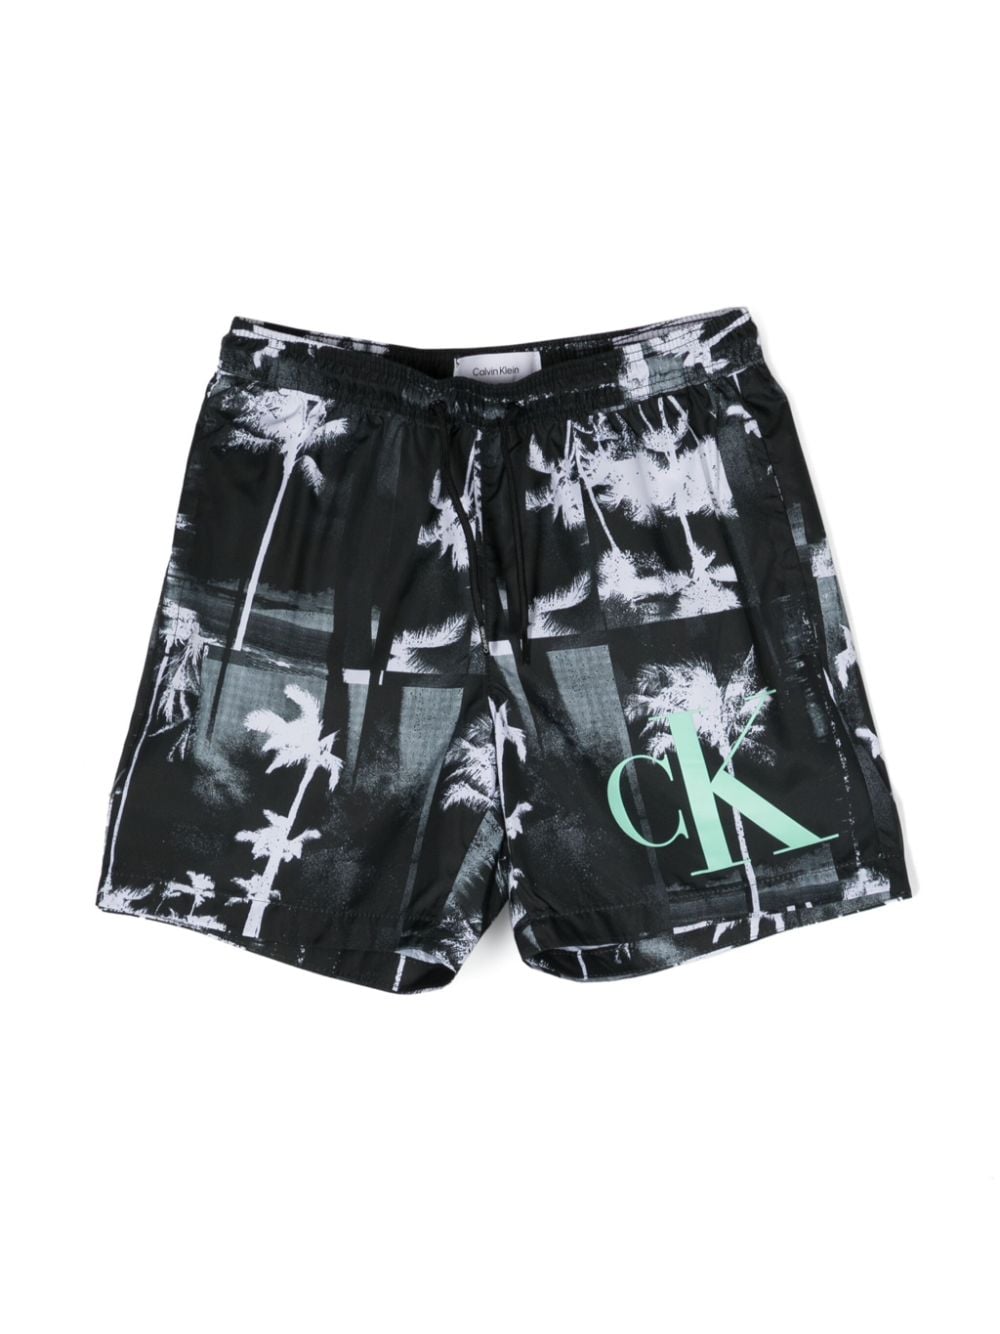 Calvin Klein Kids' Boys Black Palm Tree Print Swim Shorts